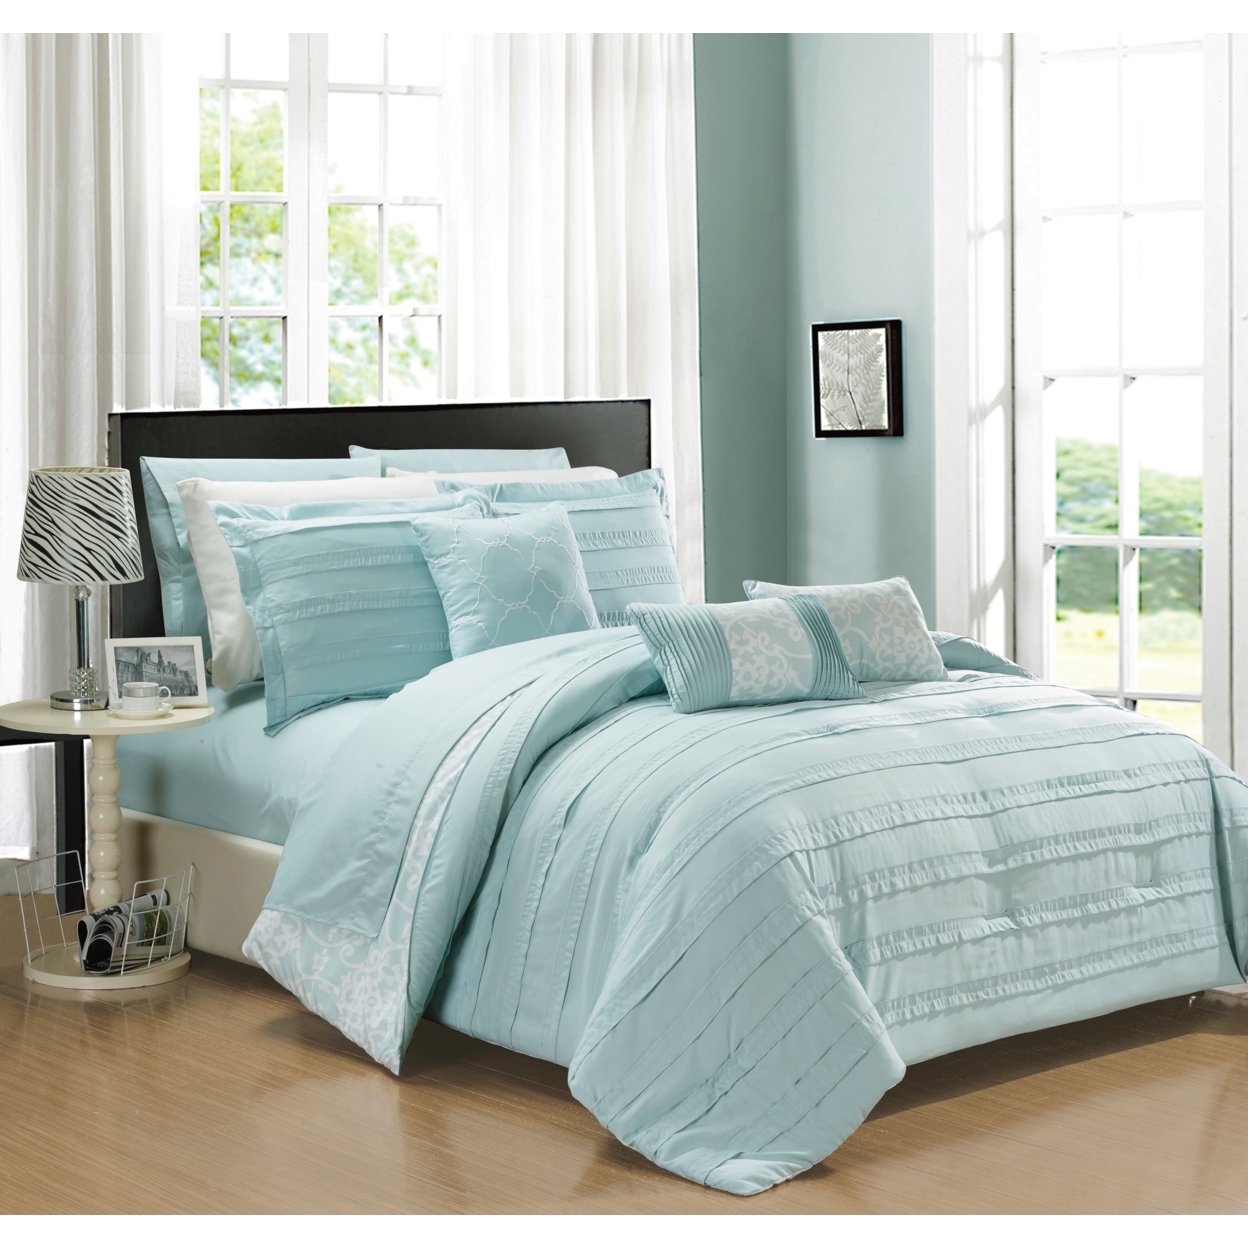 10-Piece Reversible Bed In A Bag Comforter & Sheet Set, Multiple Colors - Aqua, King